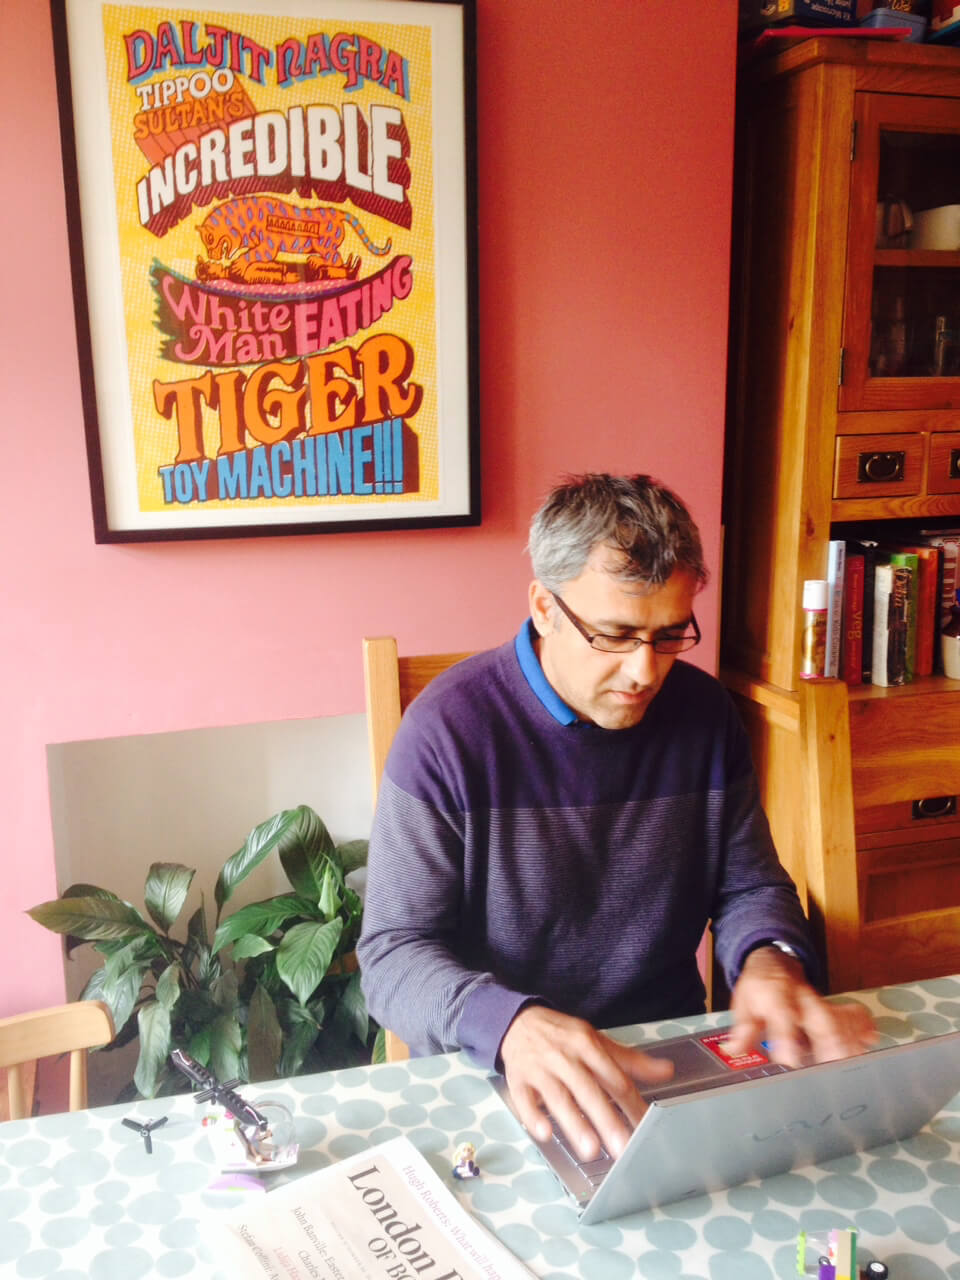 Image shows Poet Dajit Nagra at work at his desk